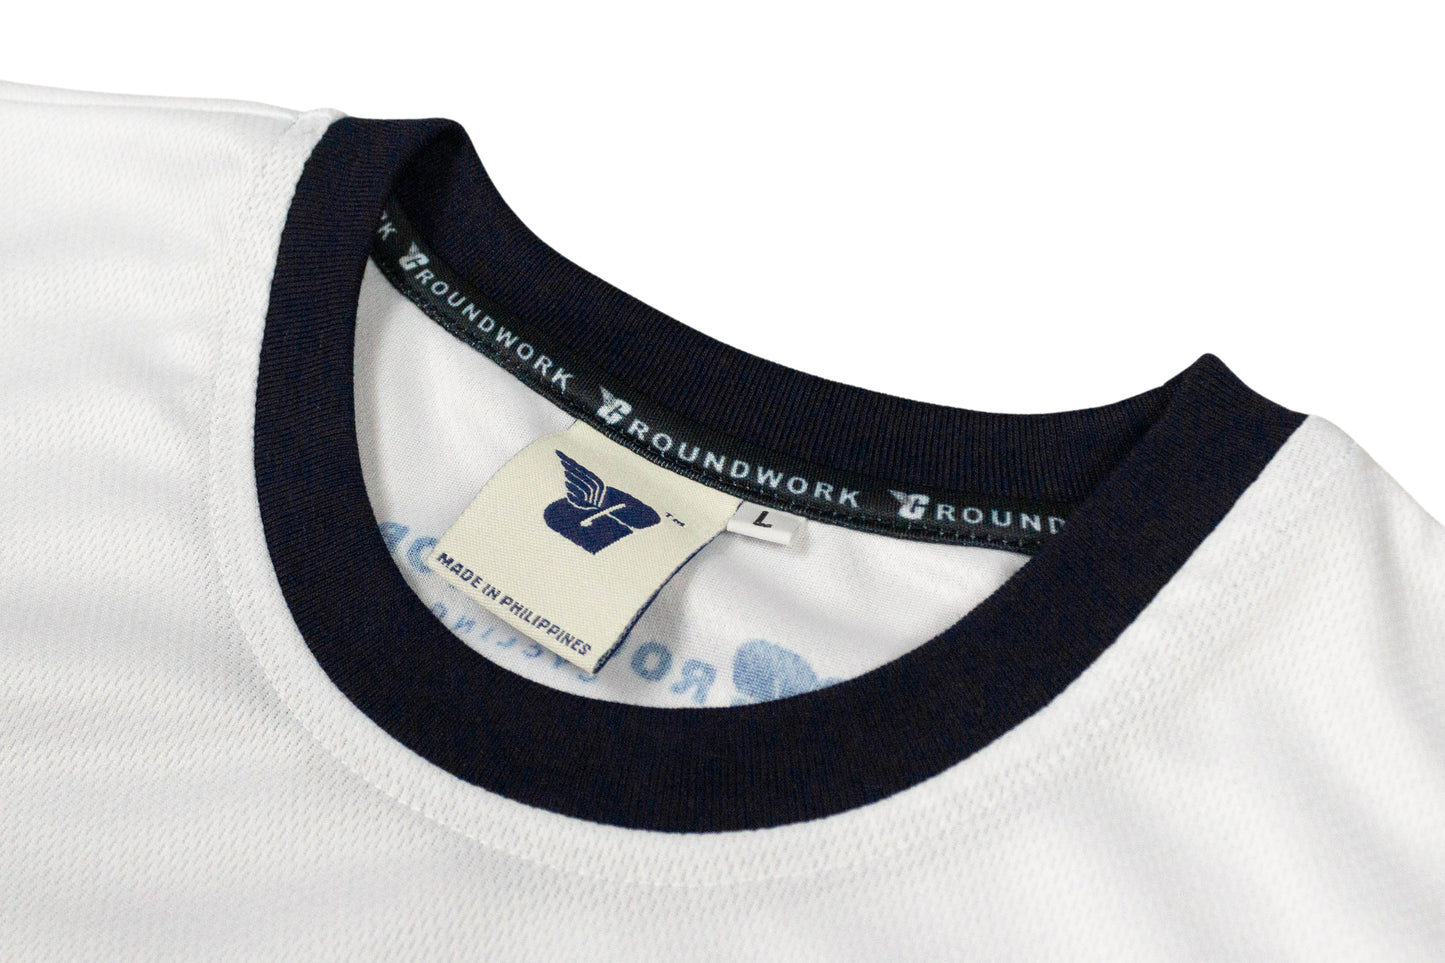 Blacksnow x Groundwork long-sleeves Jersey (White/Blue)